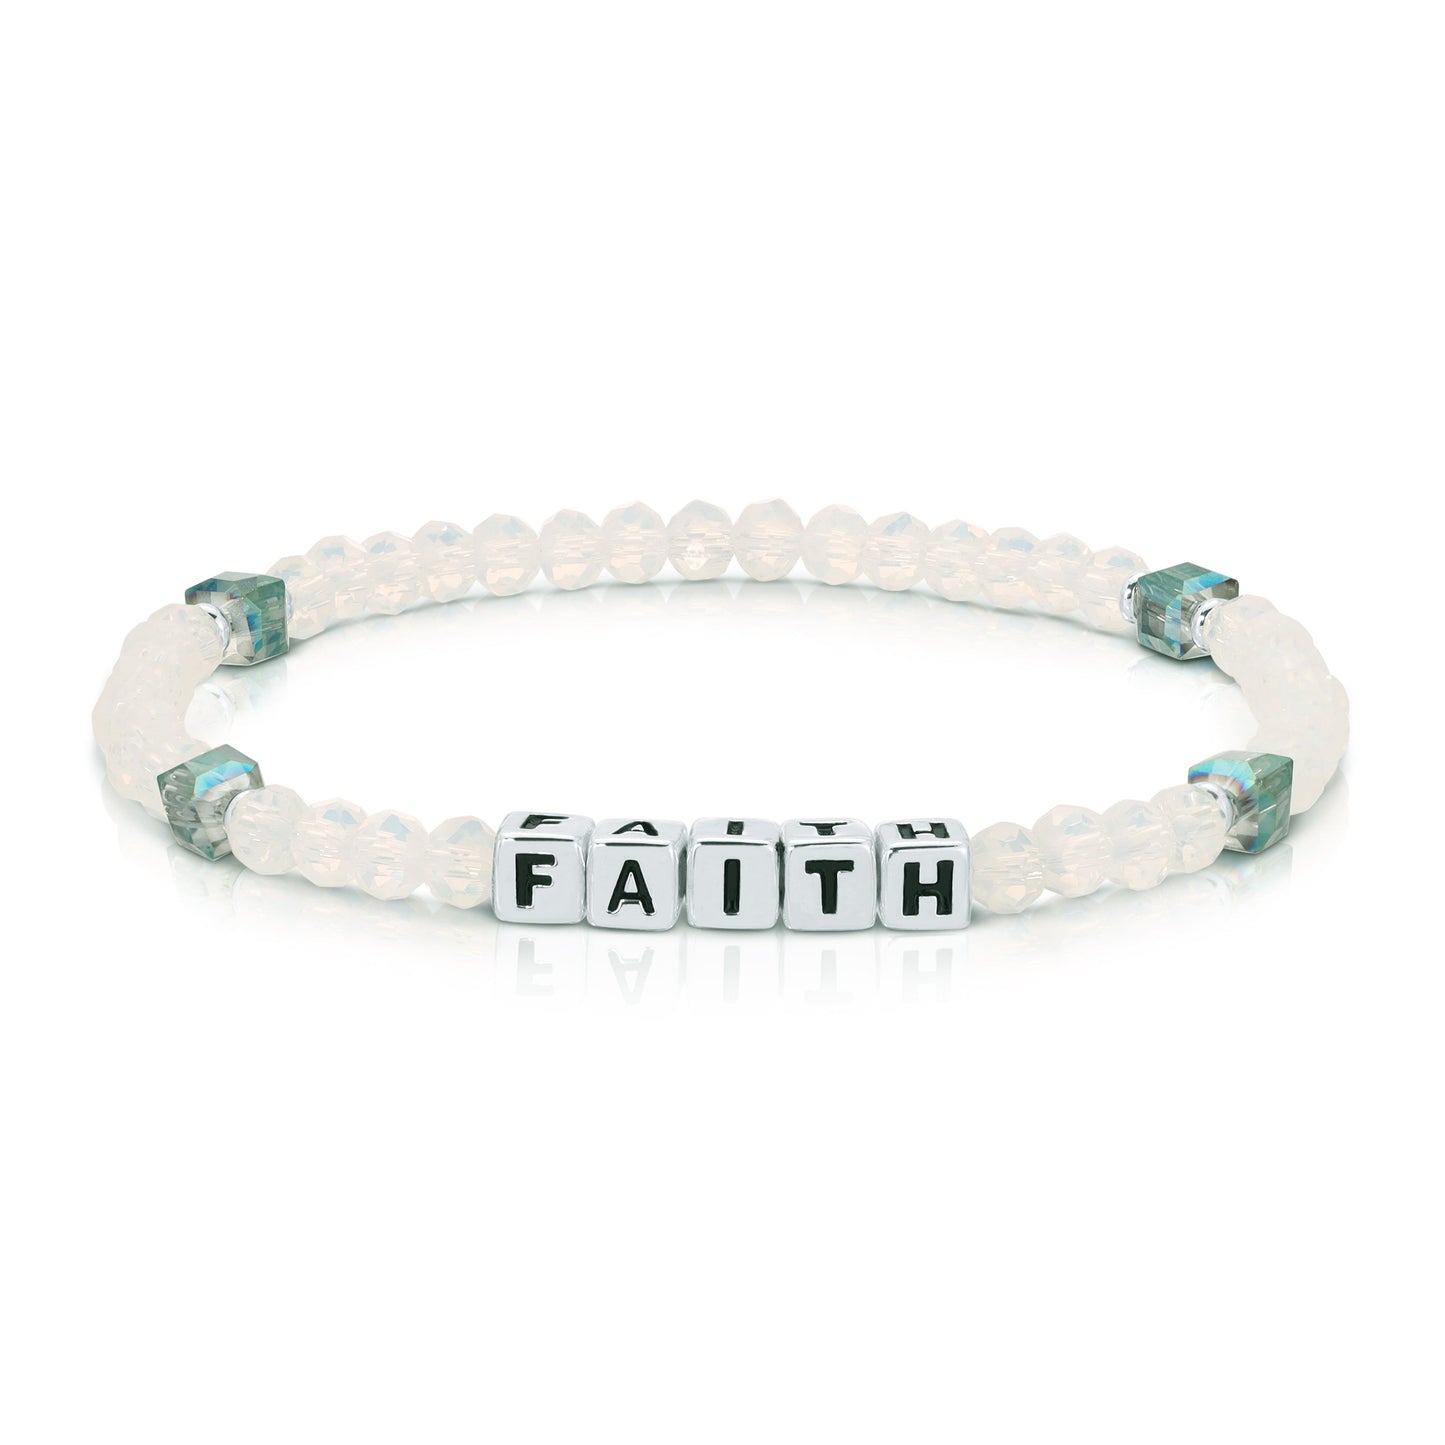 FAITH Colorful Words Bracelet